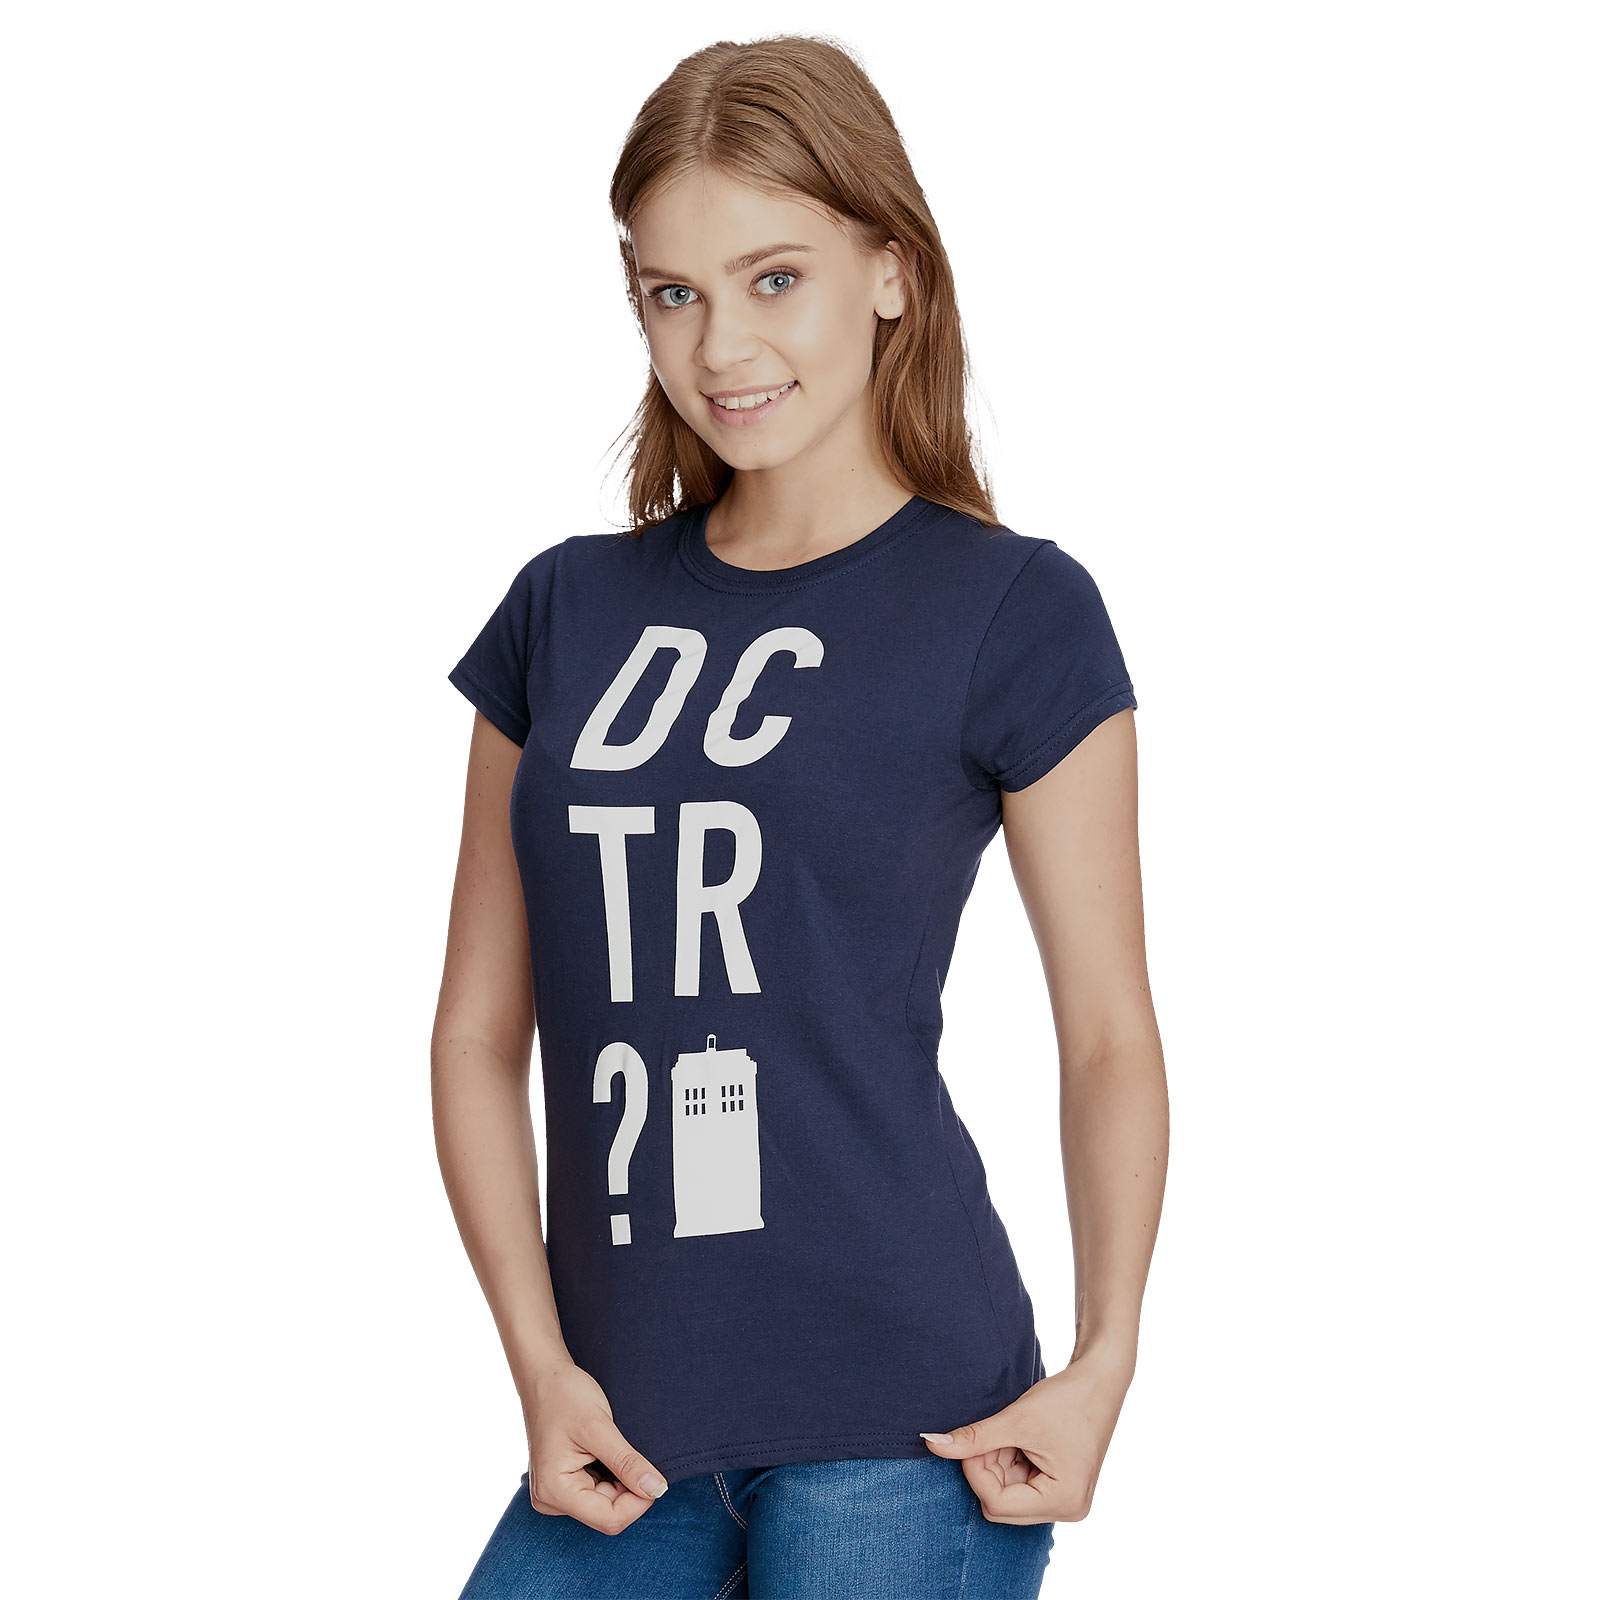 Doctor Who - DCTR Women's T-Shirt Blue